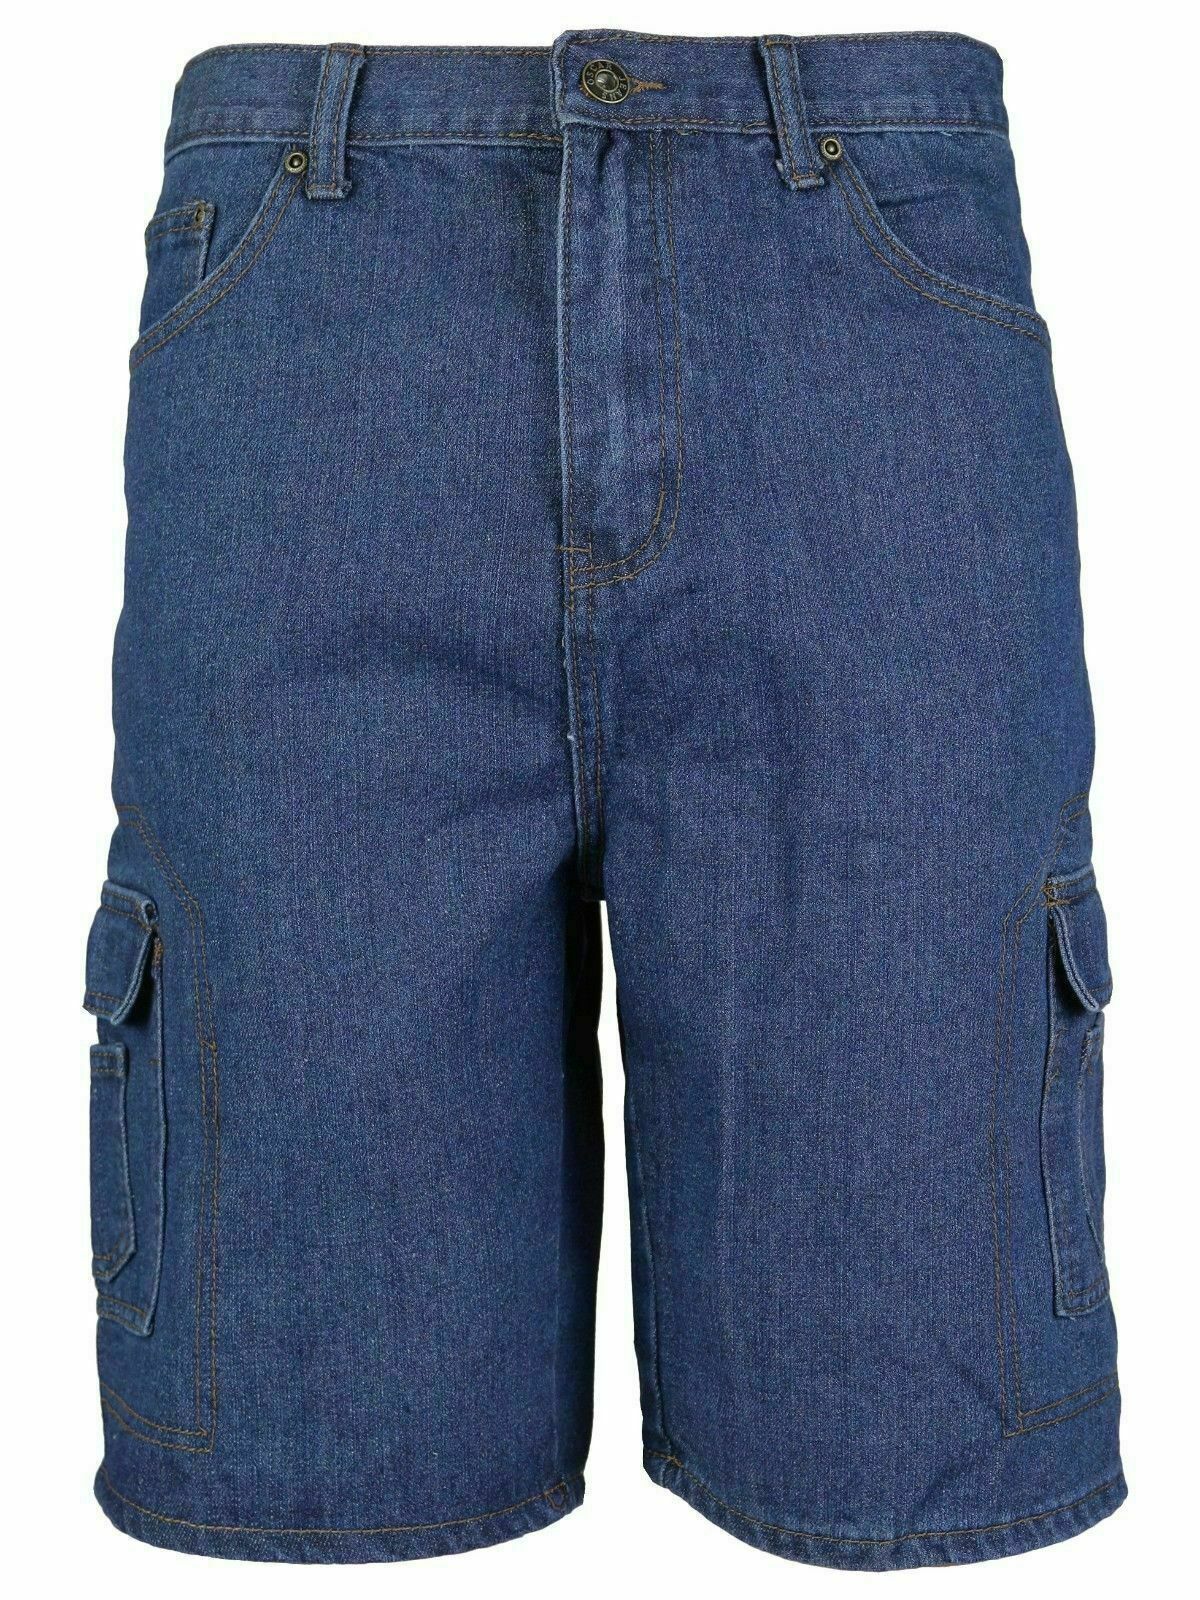 Men's Premium Cotton Multi Pocket Relaxed Fit Stonewash Denim Jean ...